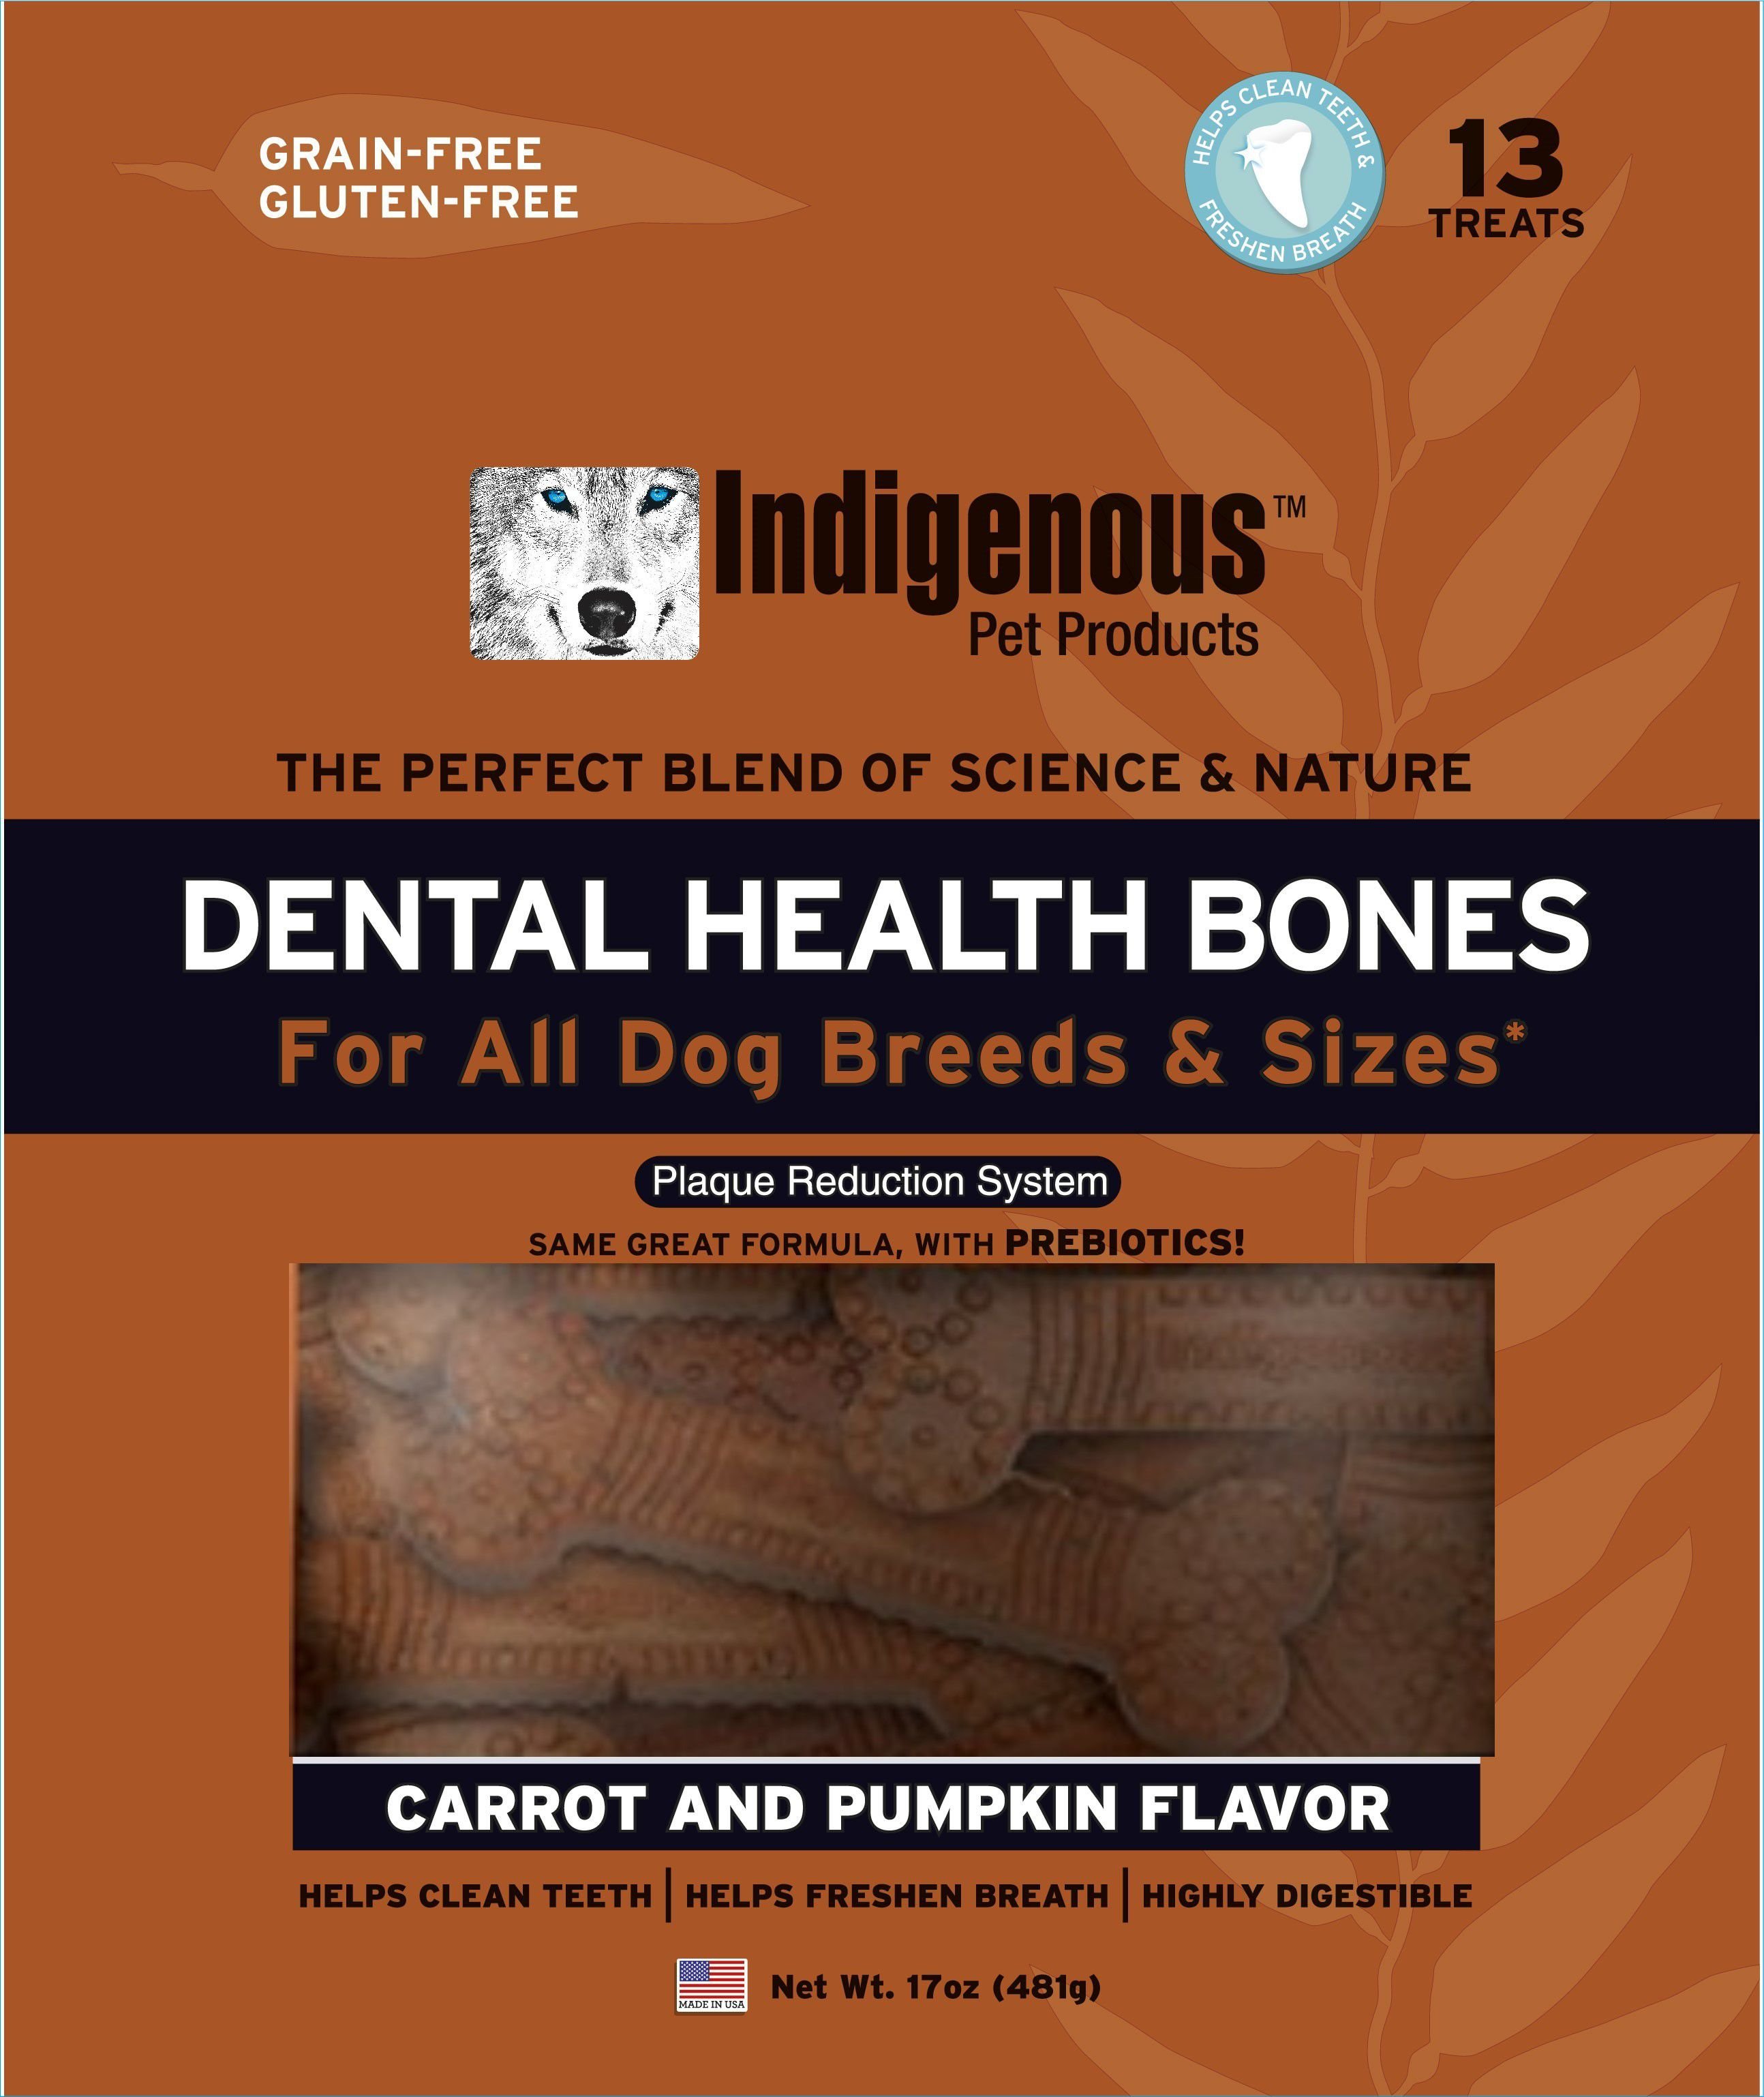 Grain-Free Carrot & Pumpkin Flavored Dental Dog Treats